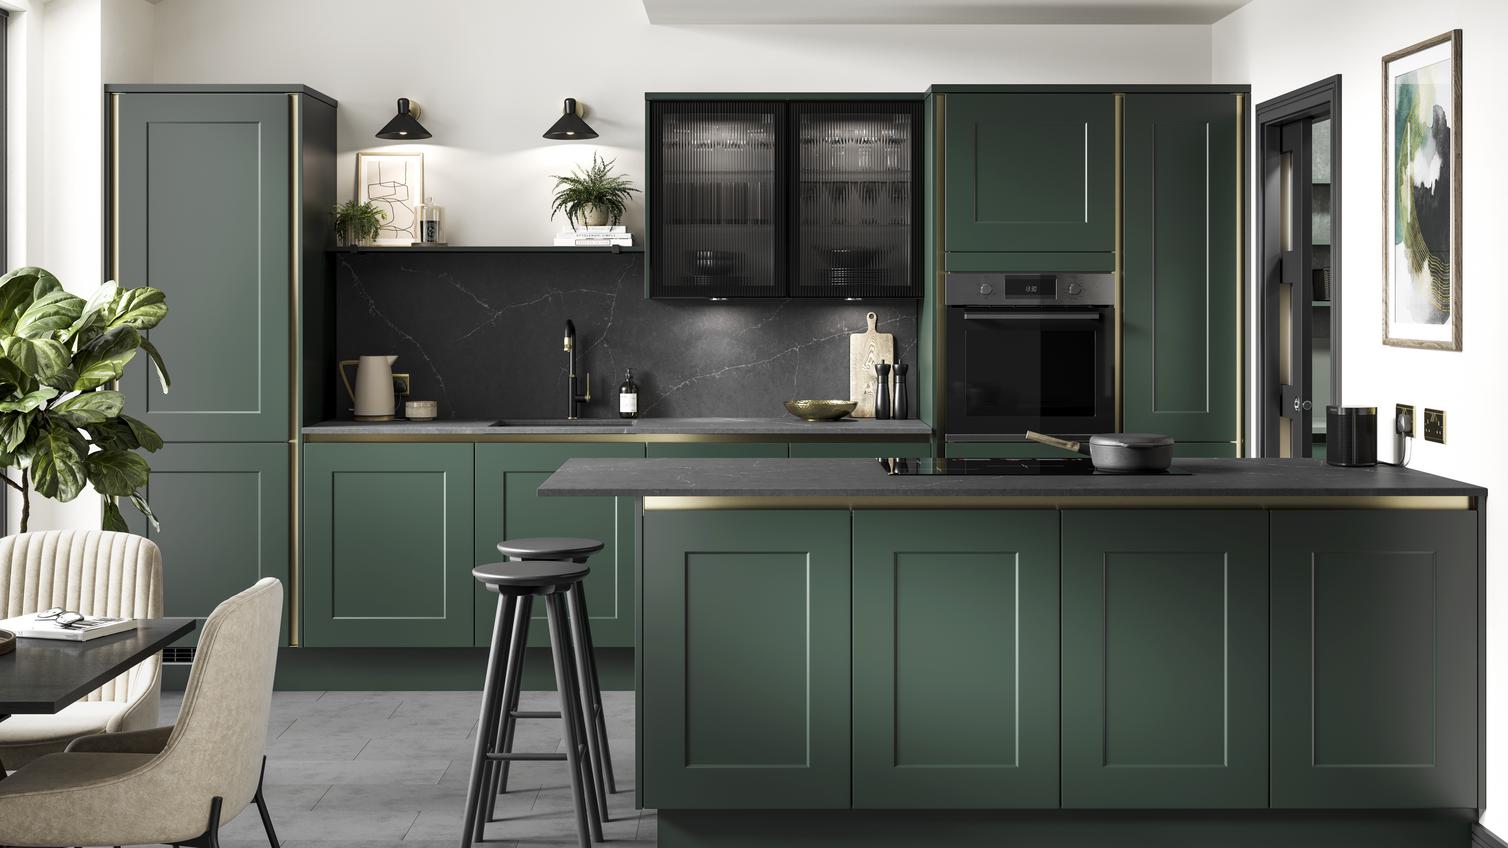 A fir green kitchen idea with handleless shaker cupboard doors in a peninsula layout. Has black worktops and brass profiles.